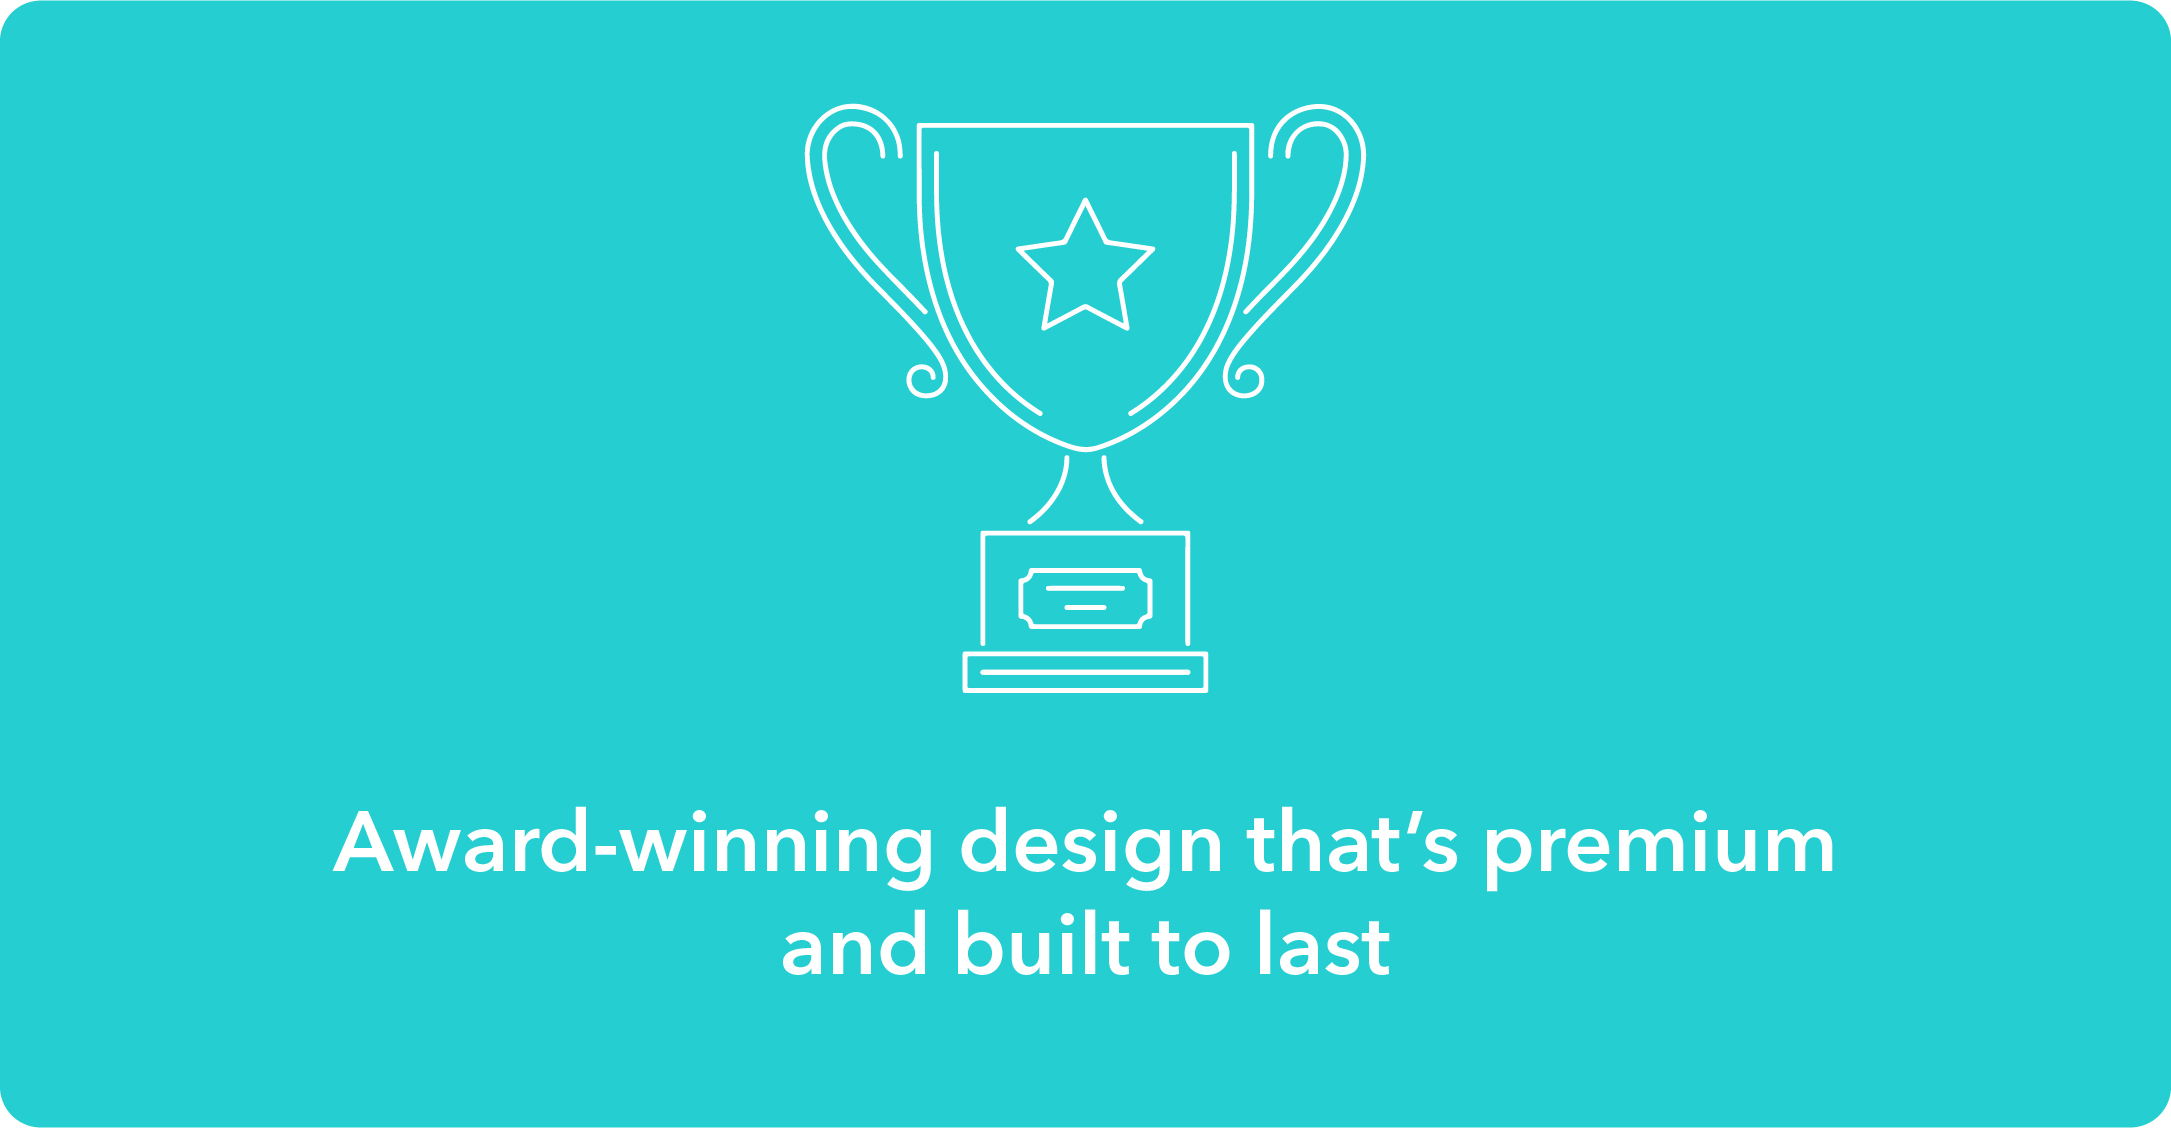 Award-winning design that's premium and built to last